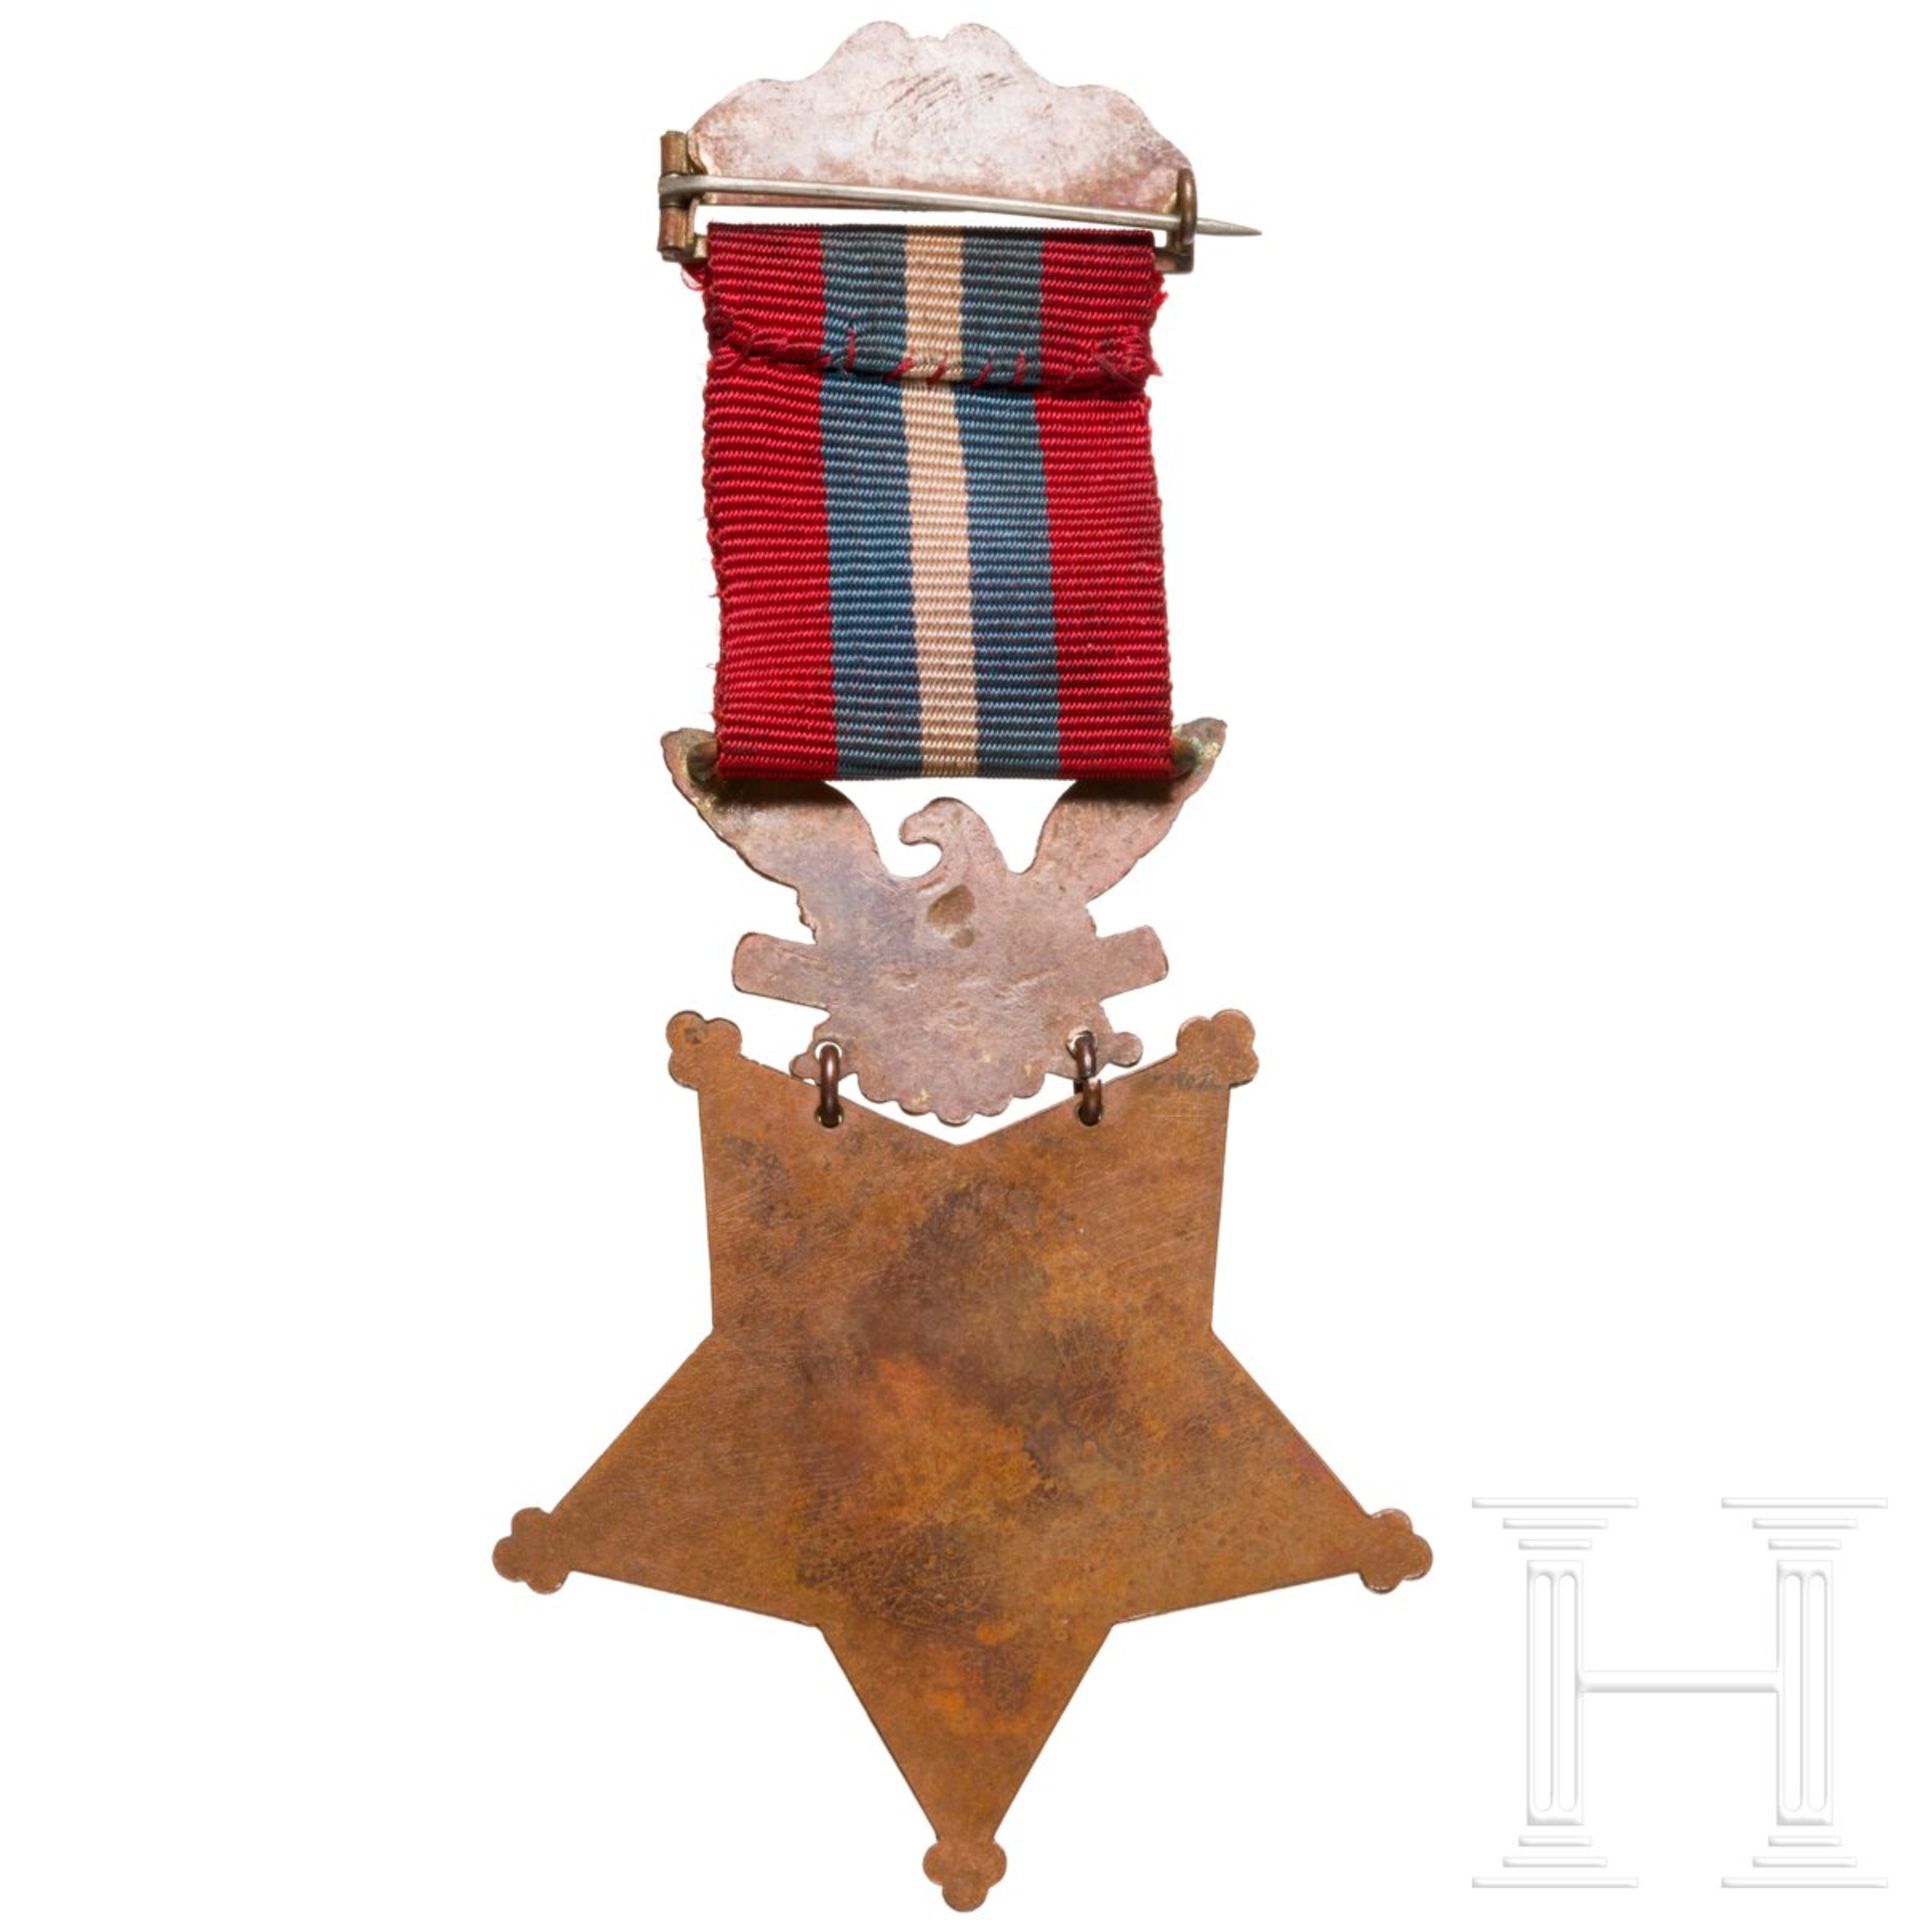 Congressional Medal of Honor in Armeeausführung 1896 - 1904, unverausgabtes Exemplar - Bild 2 aus 3